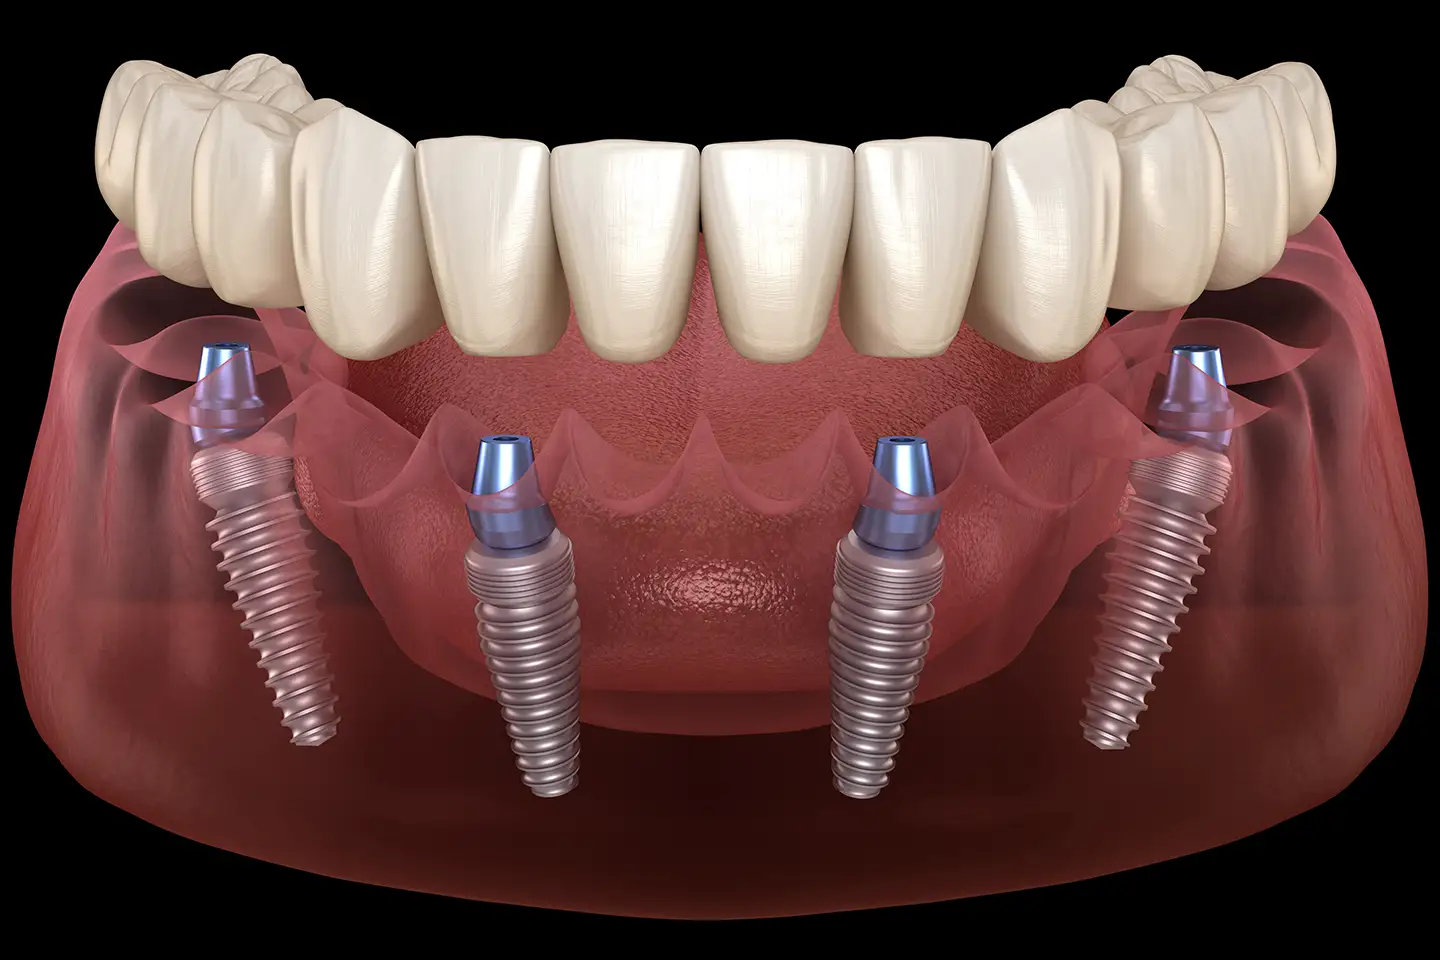 Ripon Dental in California Offers All-On-4 Dental Implants